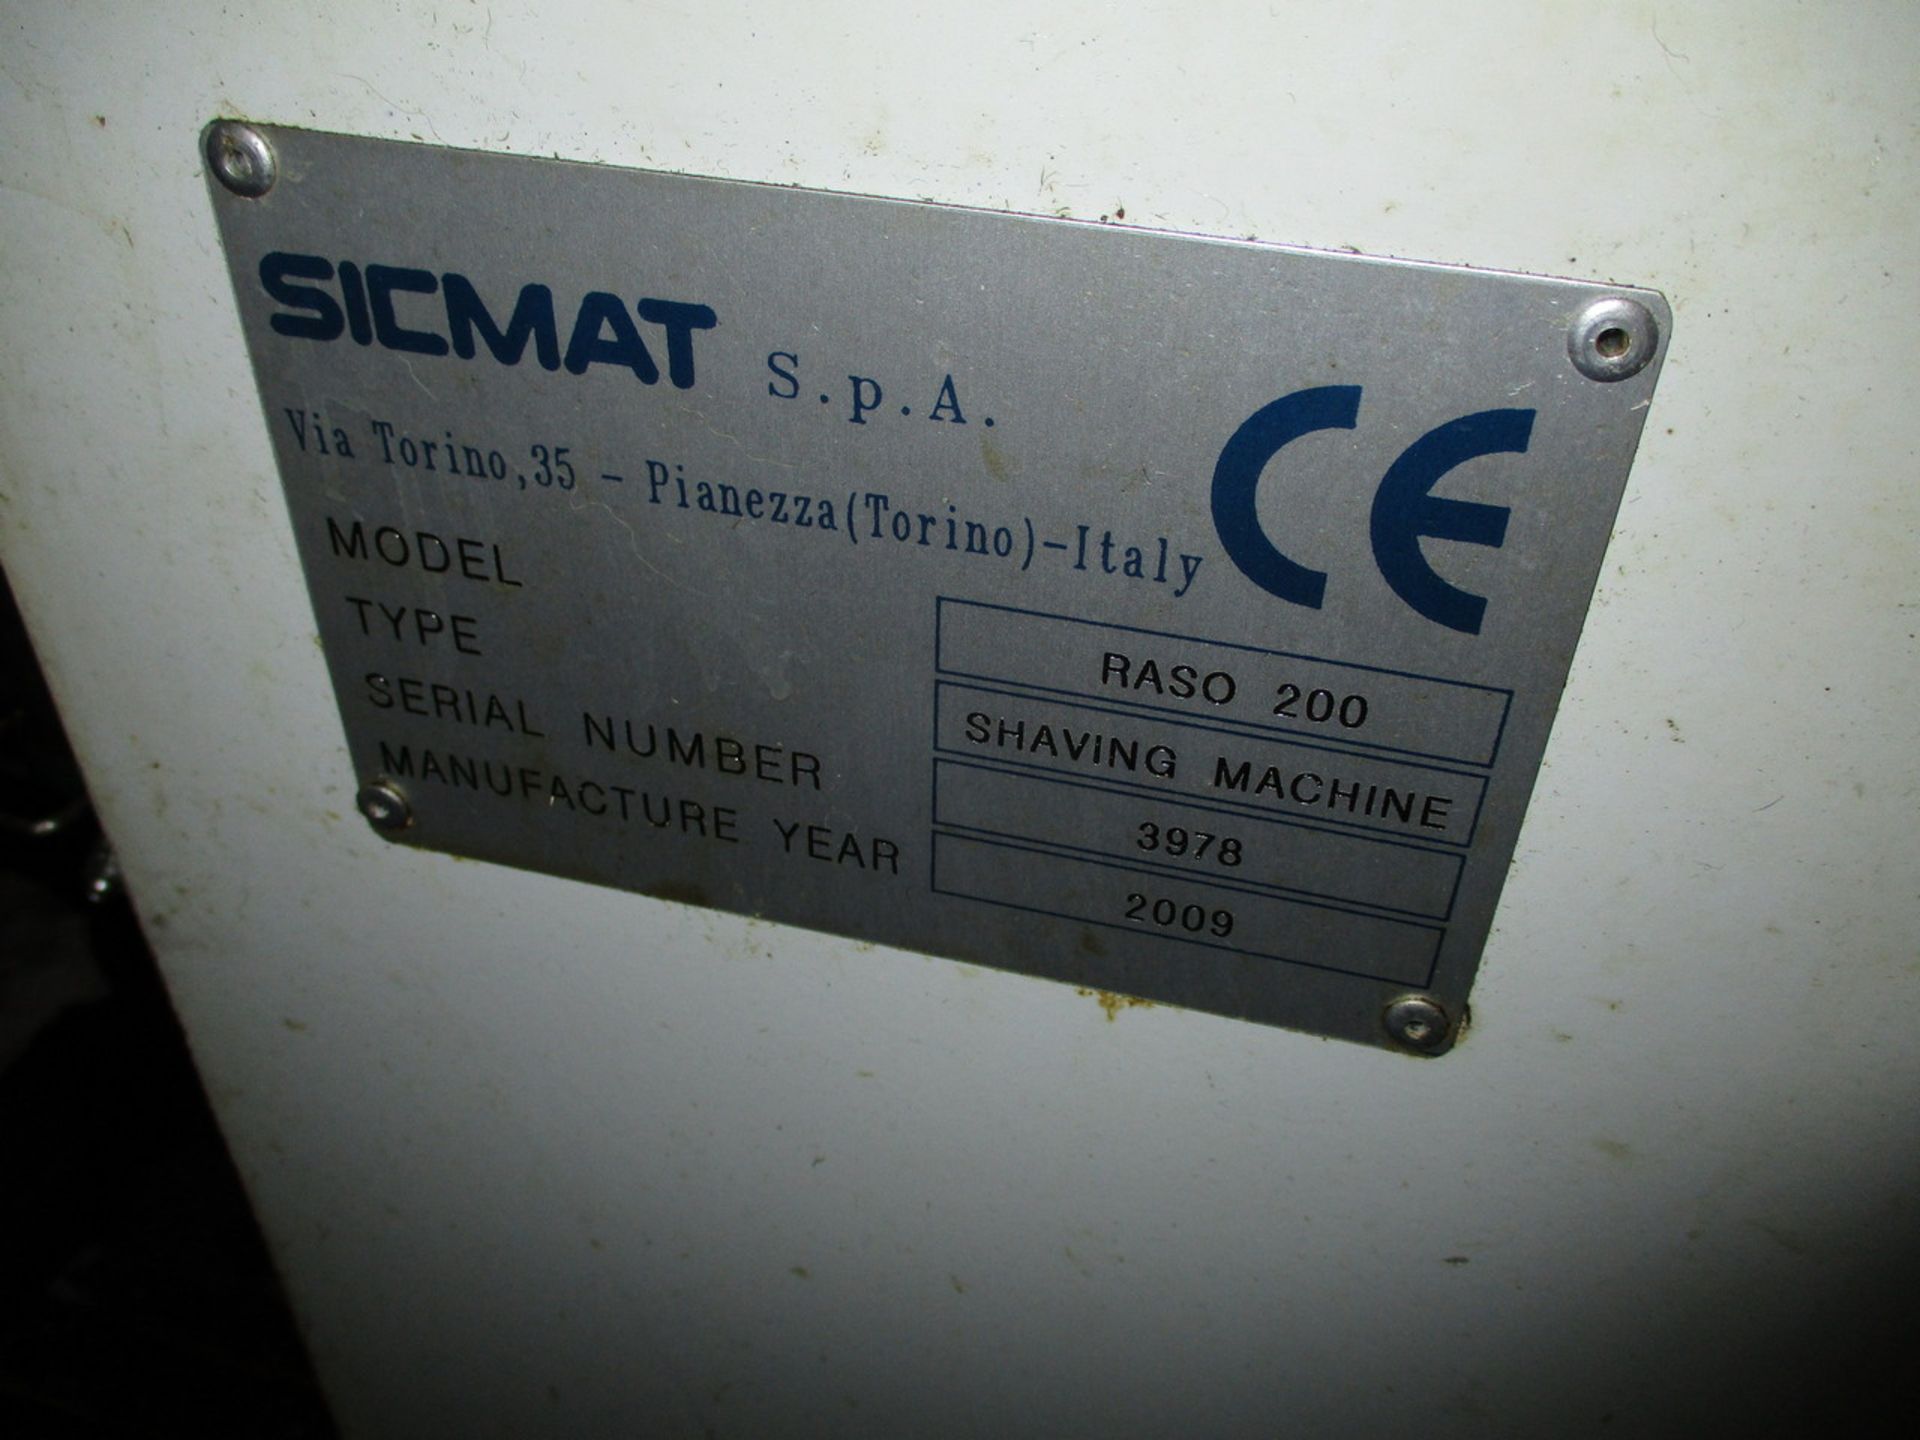 2009 Sicmat Raso 200 CNC Gear Shaver - Image 2 of 8